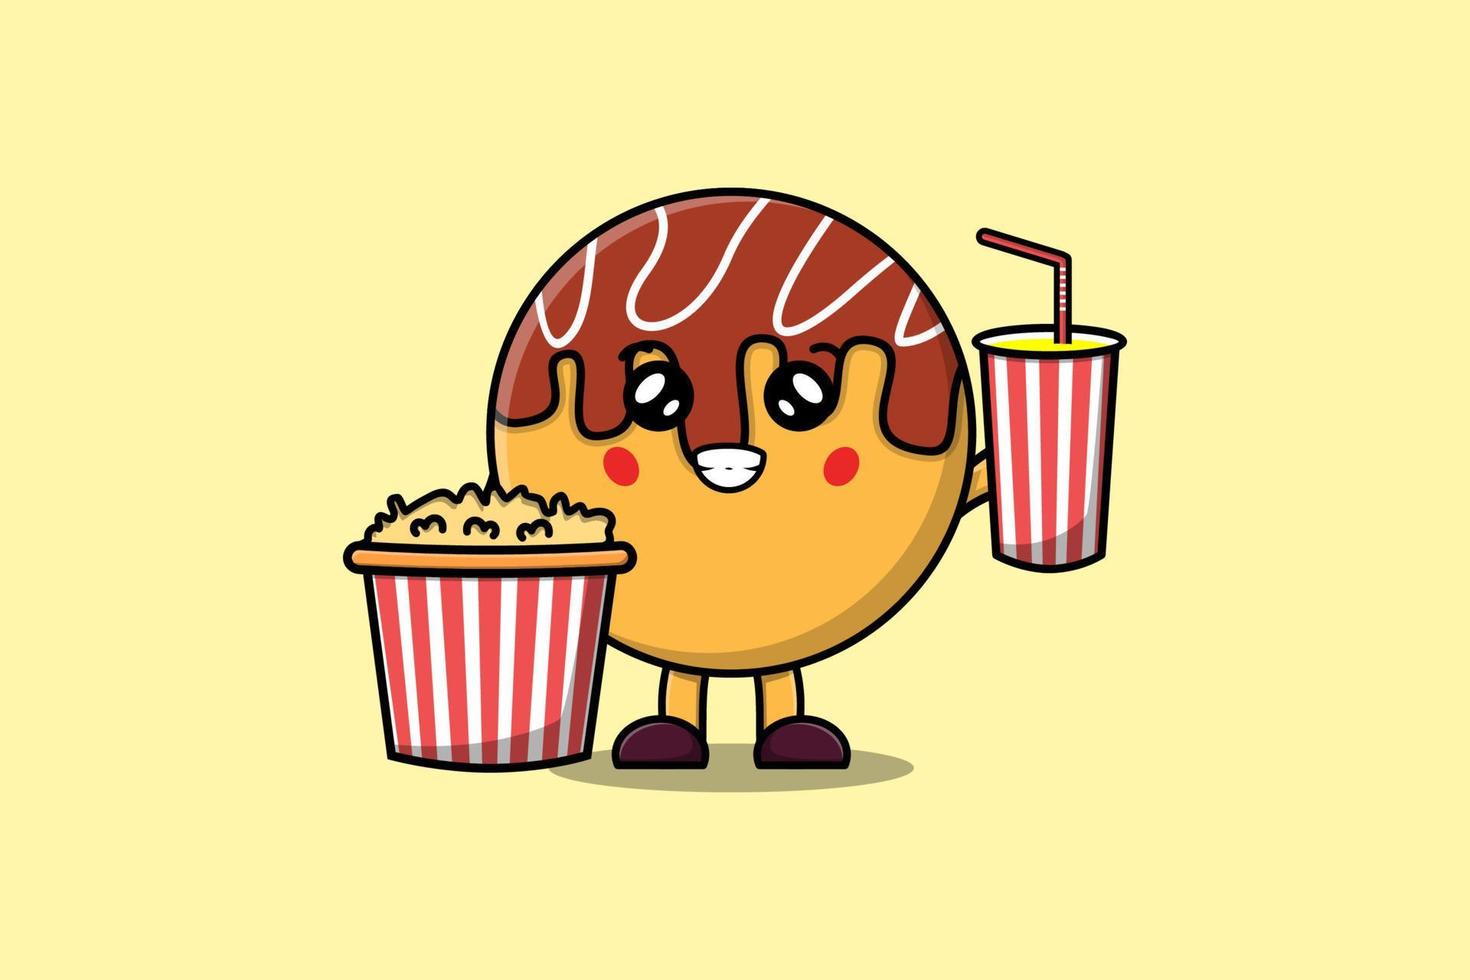 süßes cartoon takoyaki mit popcorn und getränk vektor